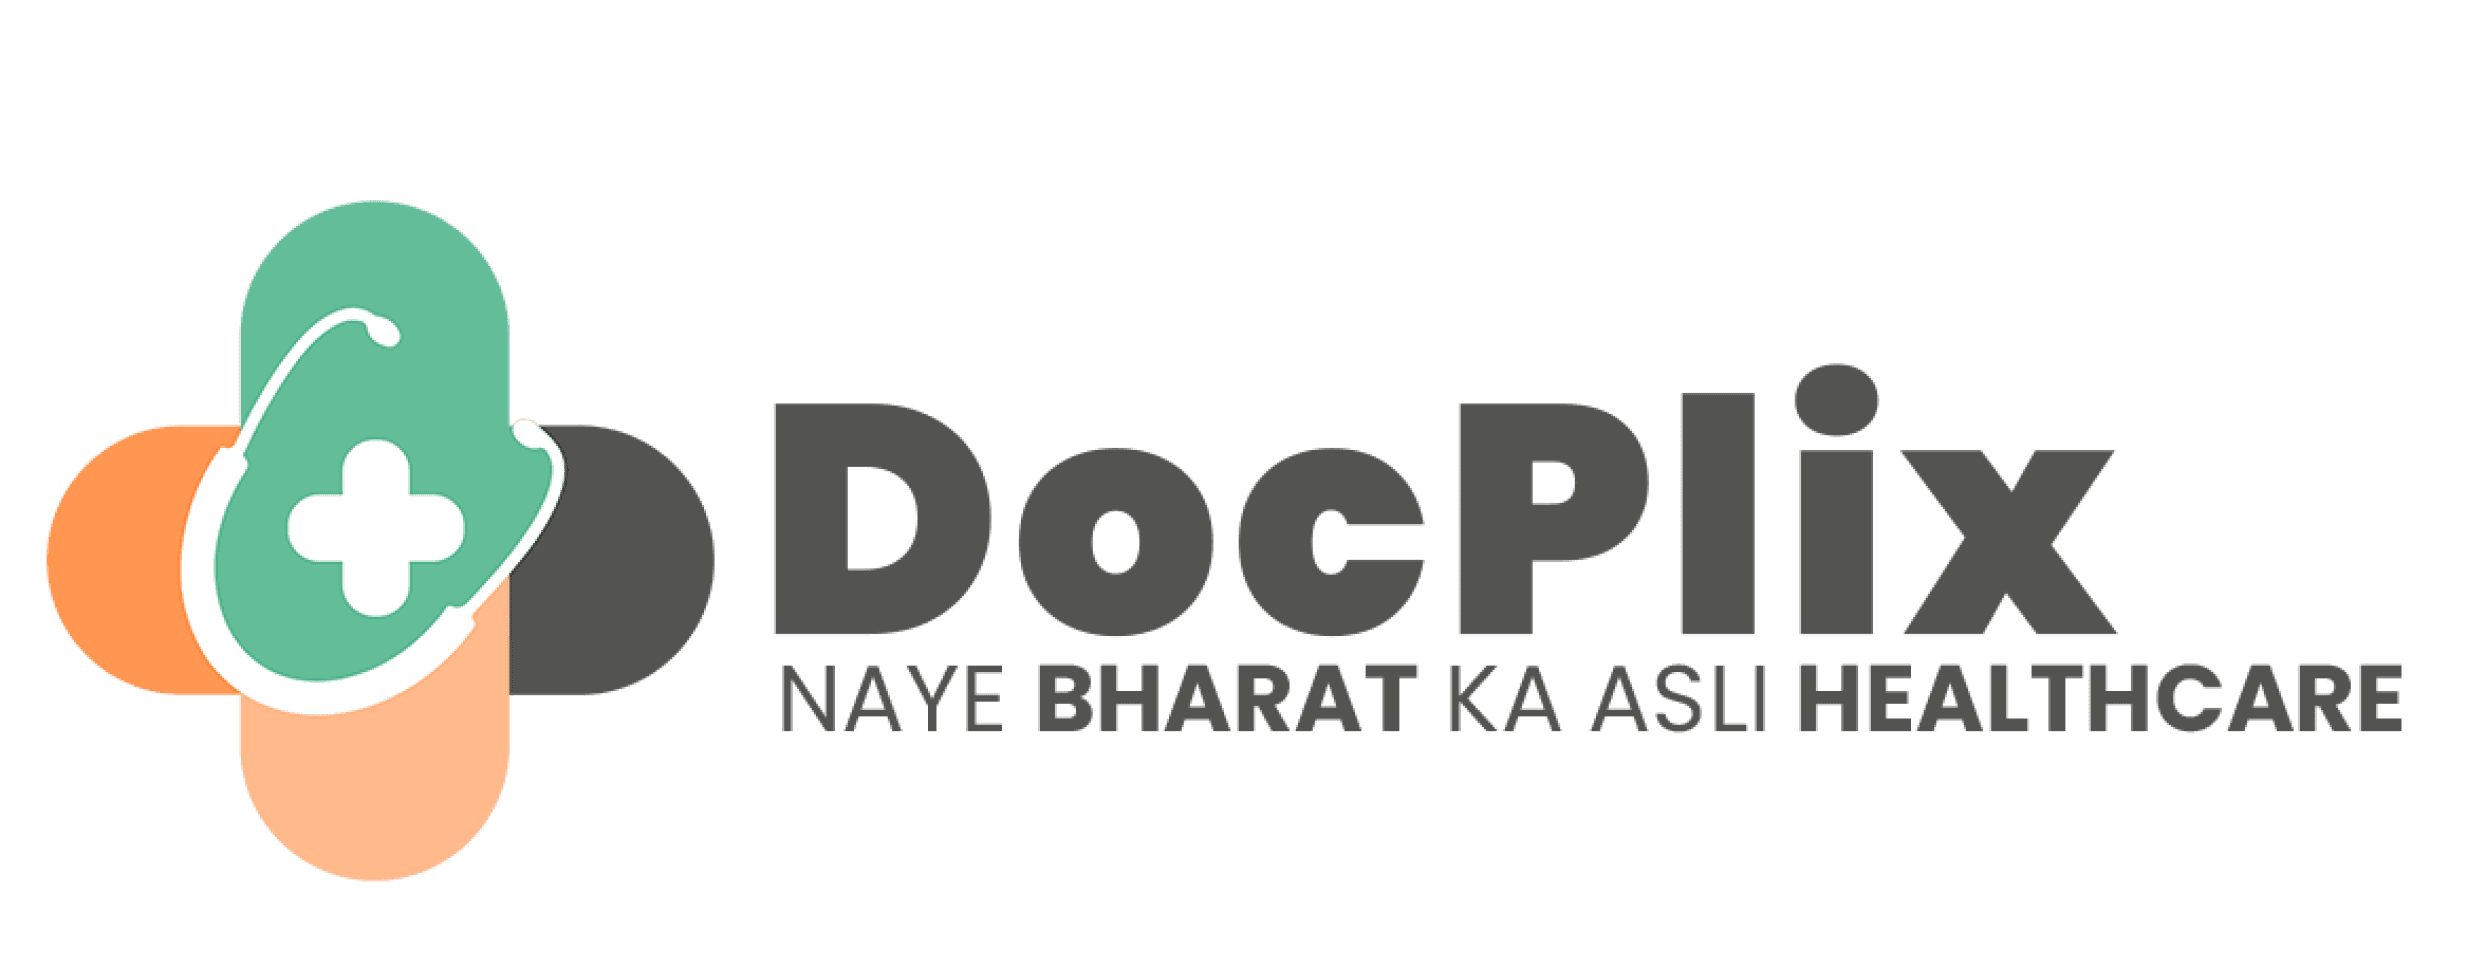 Docplix logo